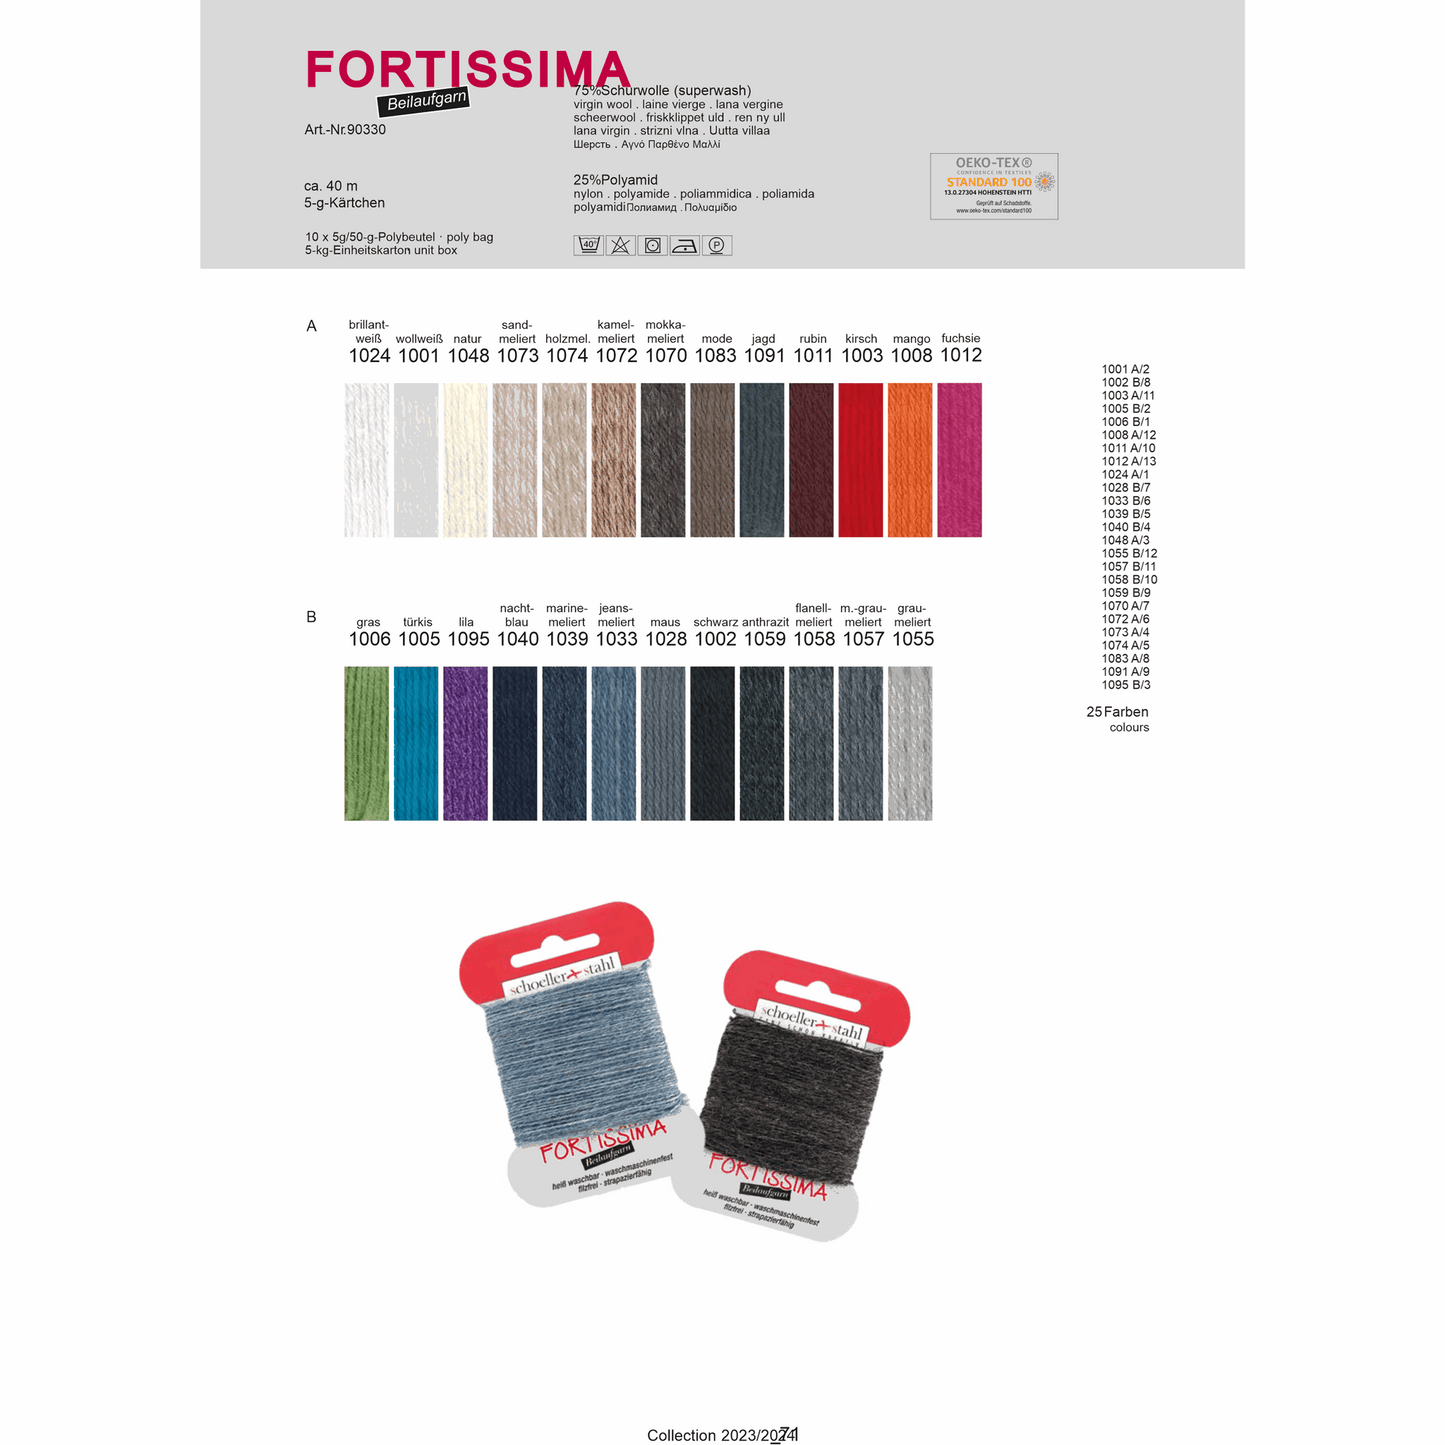 Fortissima Beilaufgarn 5g, 90330, Farbe 1006, gras